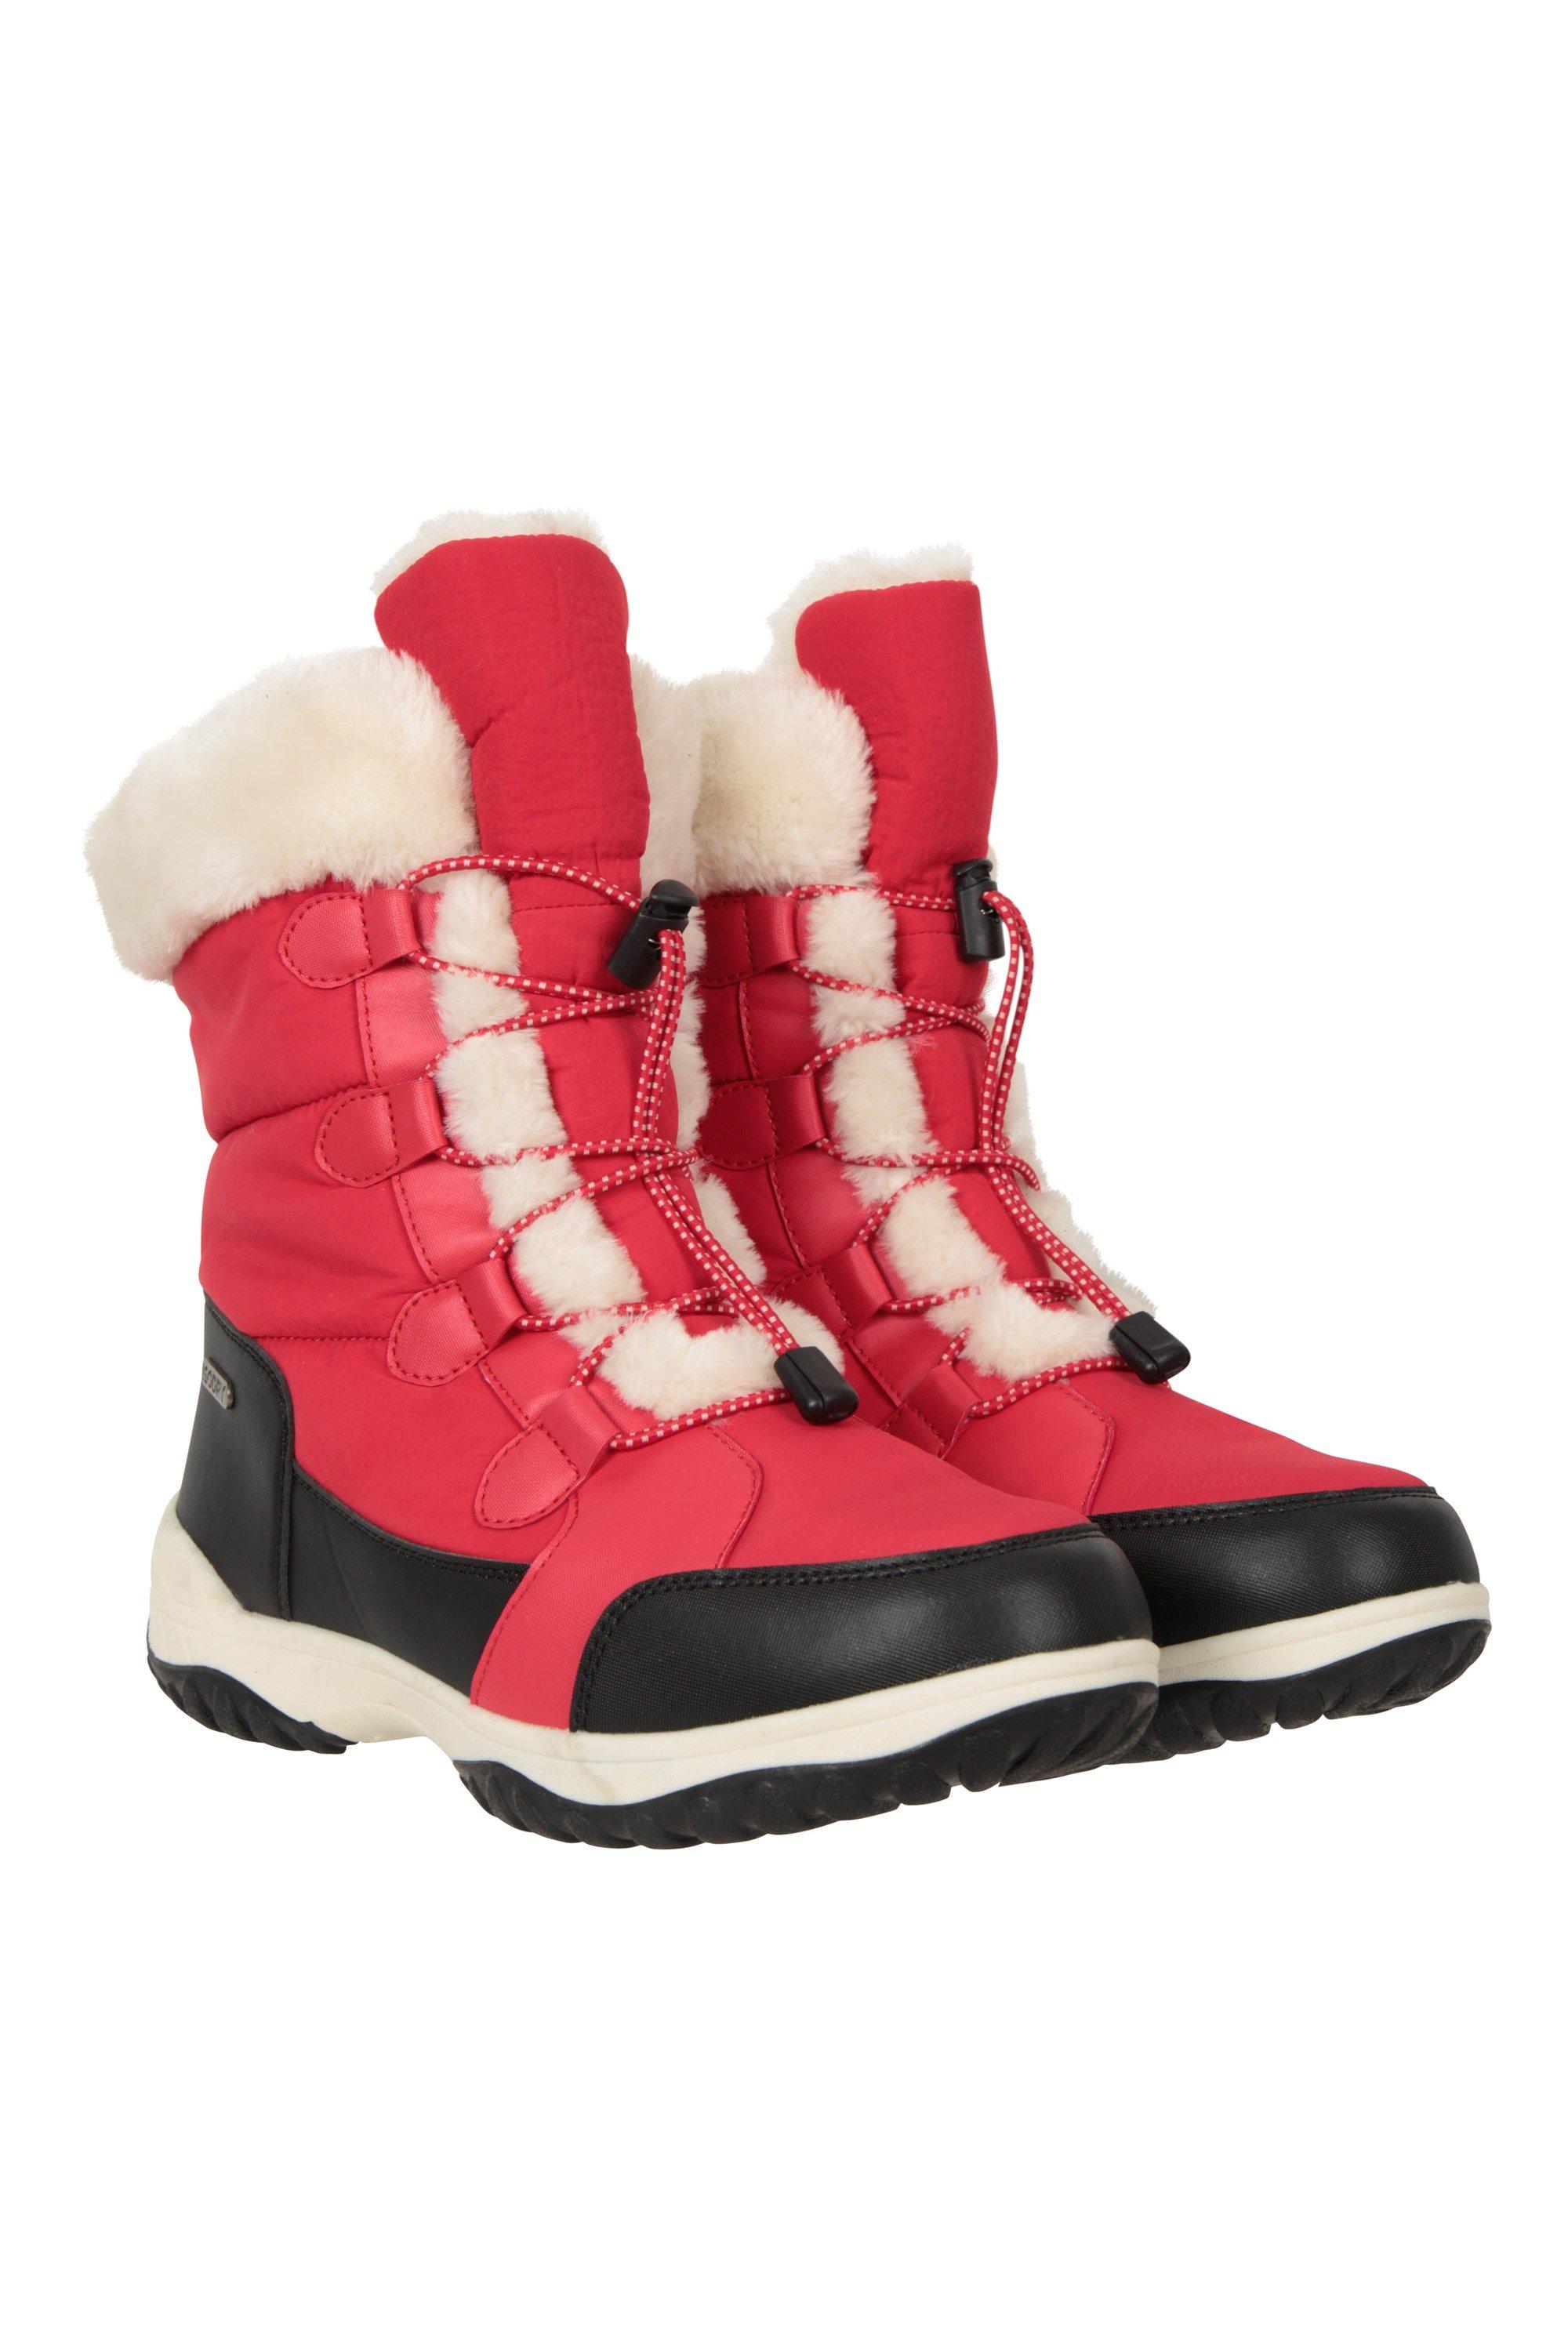 Snowflake Boots Снегозащитные адаптивные лыжные ботинки Mountain Warehouse, красный baby snow boots kid